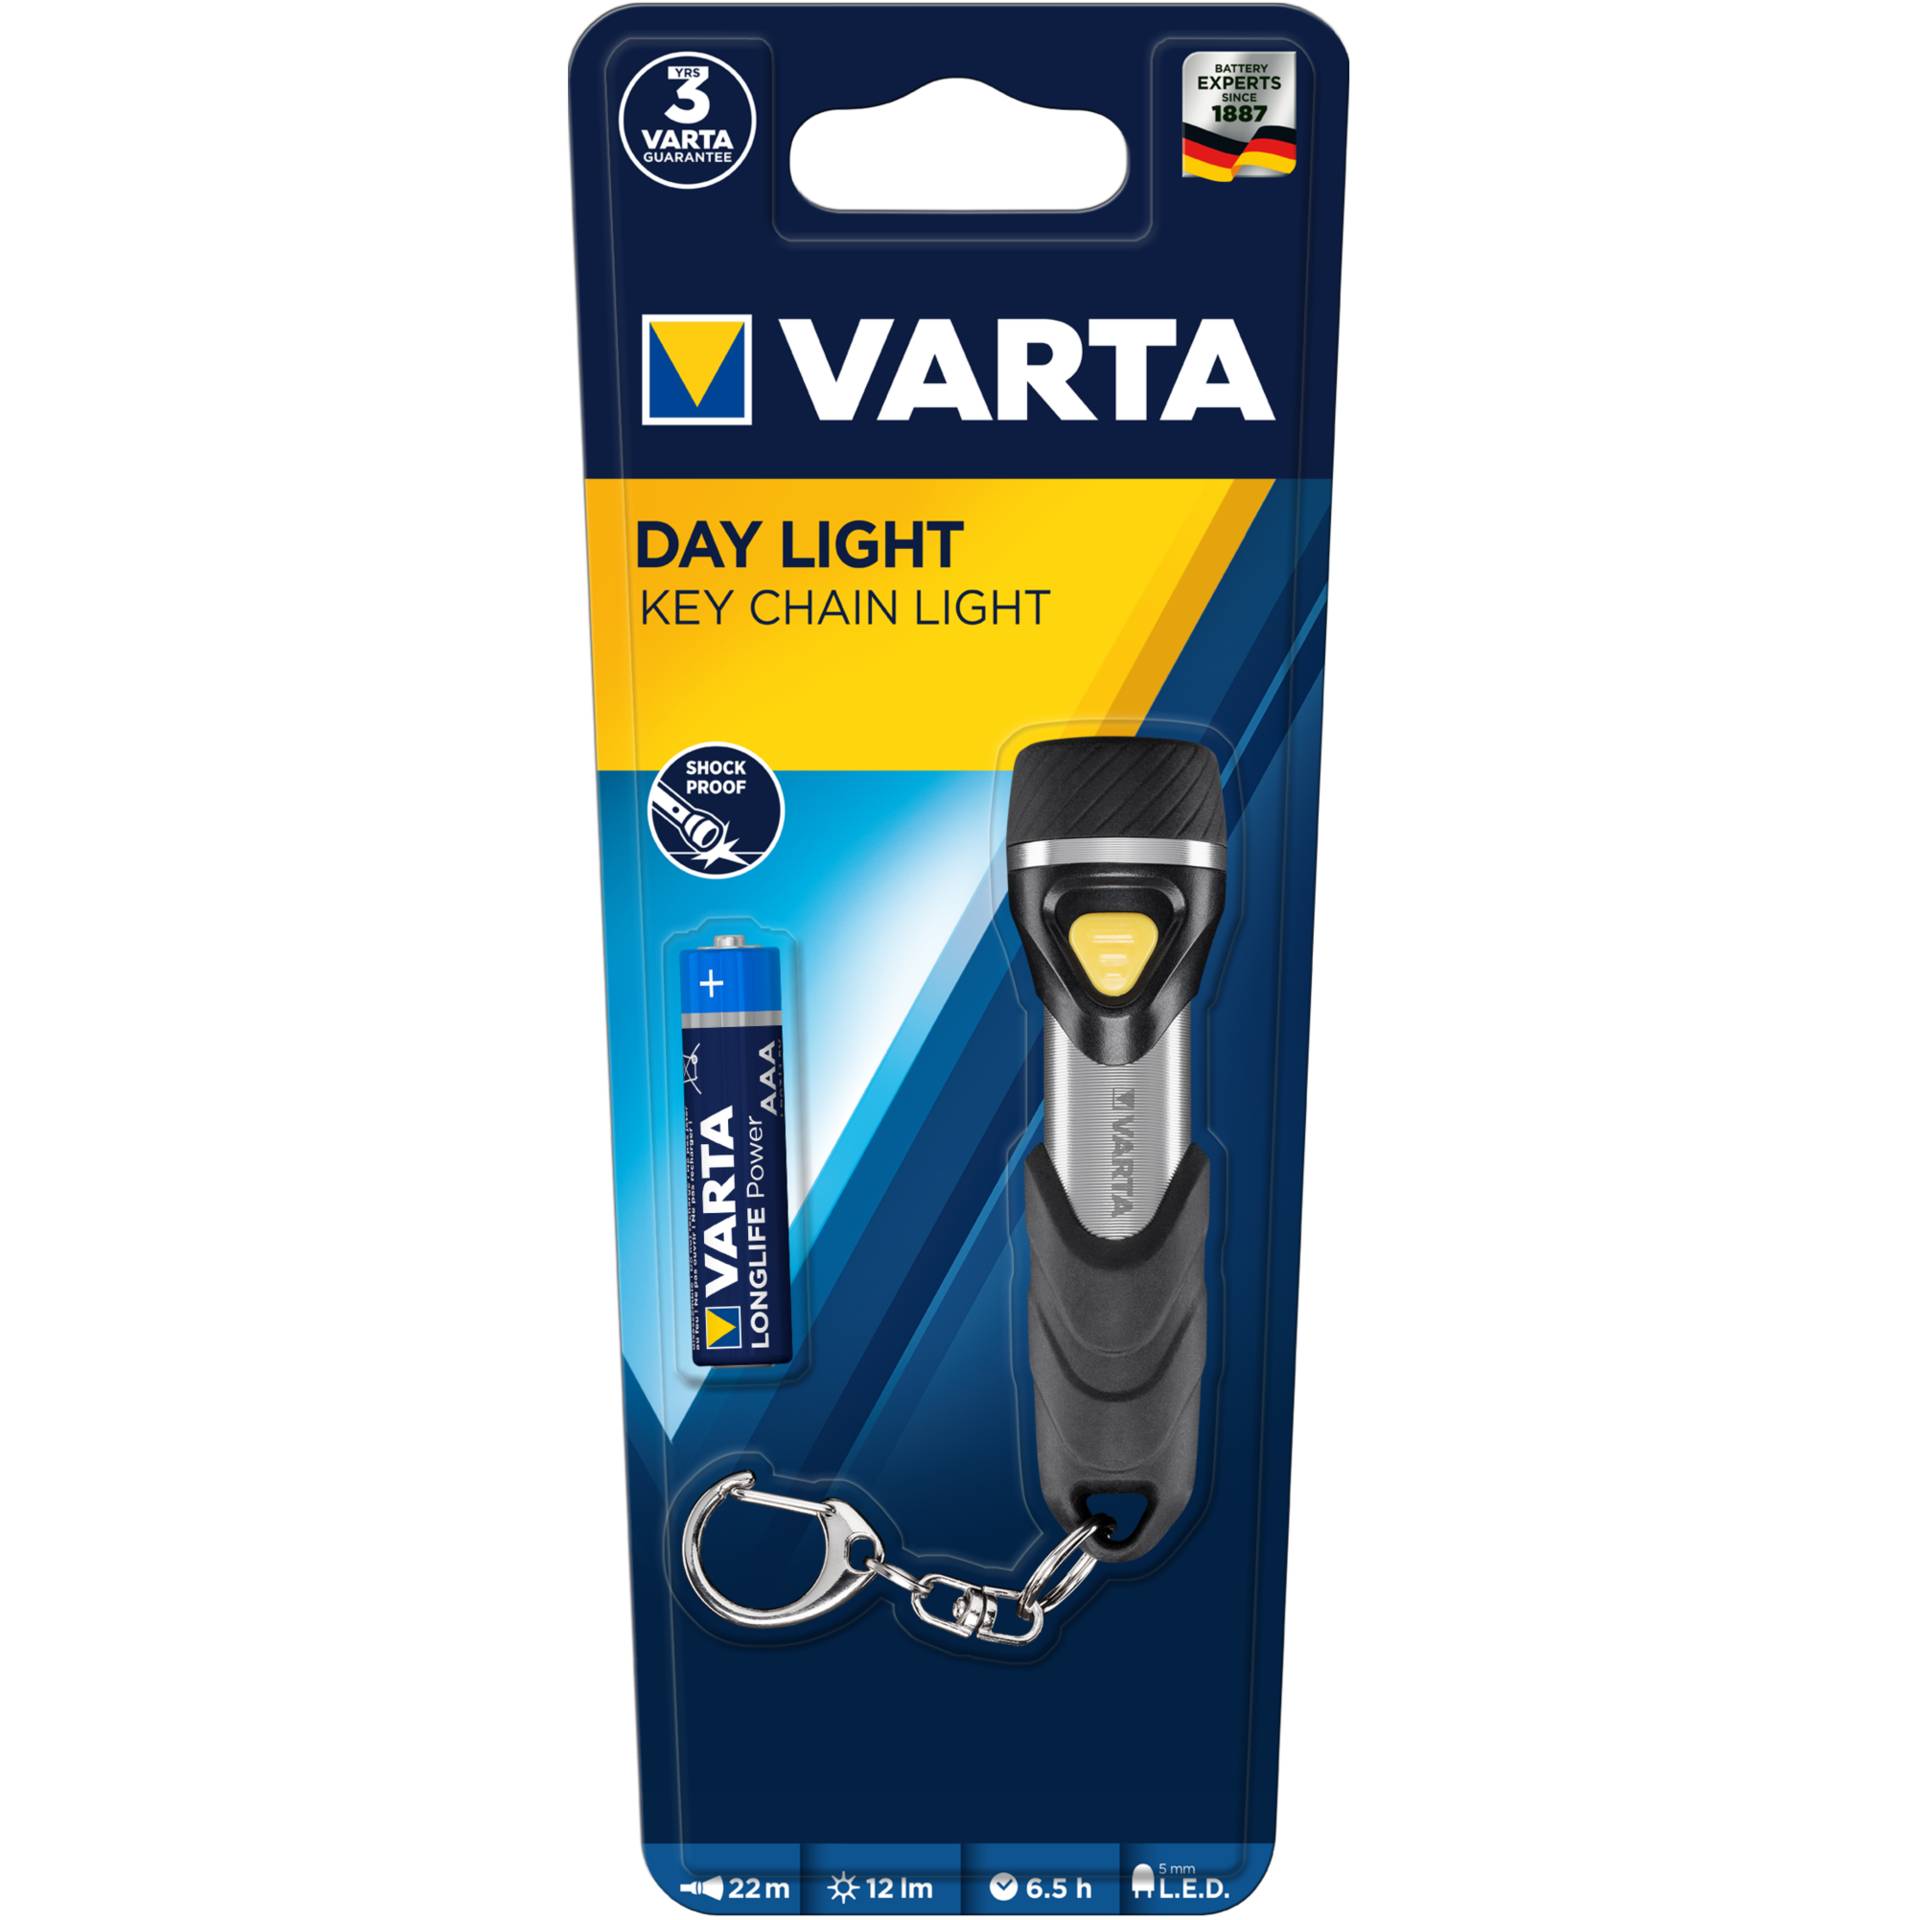 Varta Day Light Key Chain 5mm LED